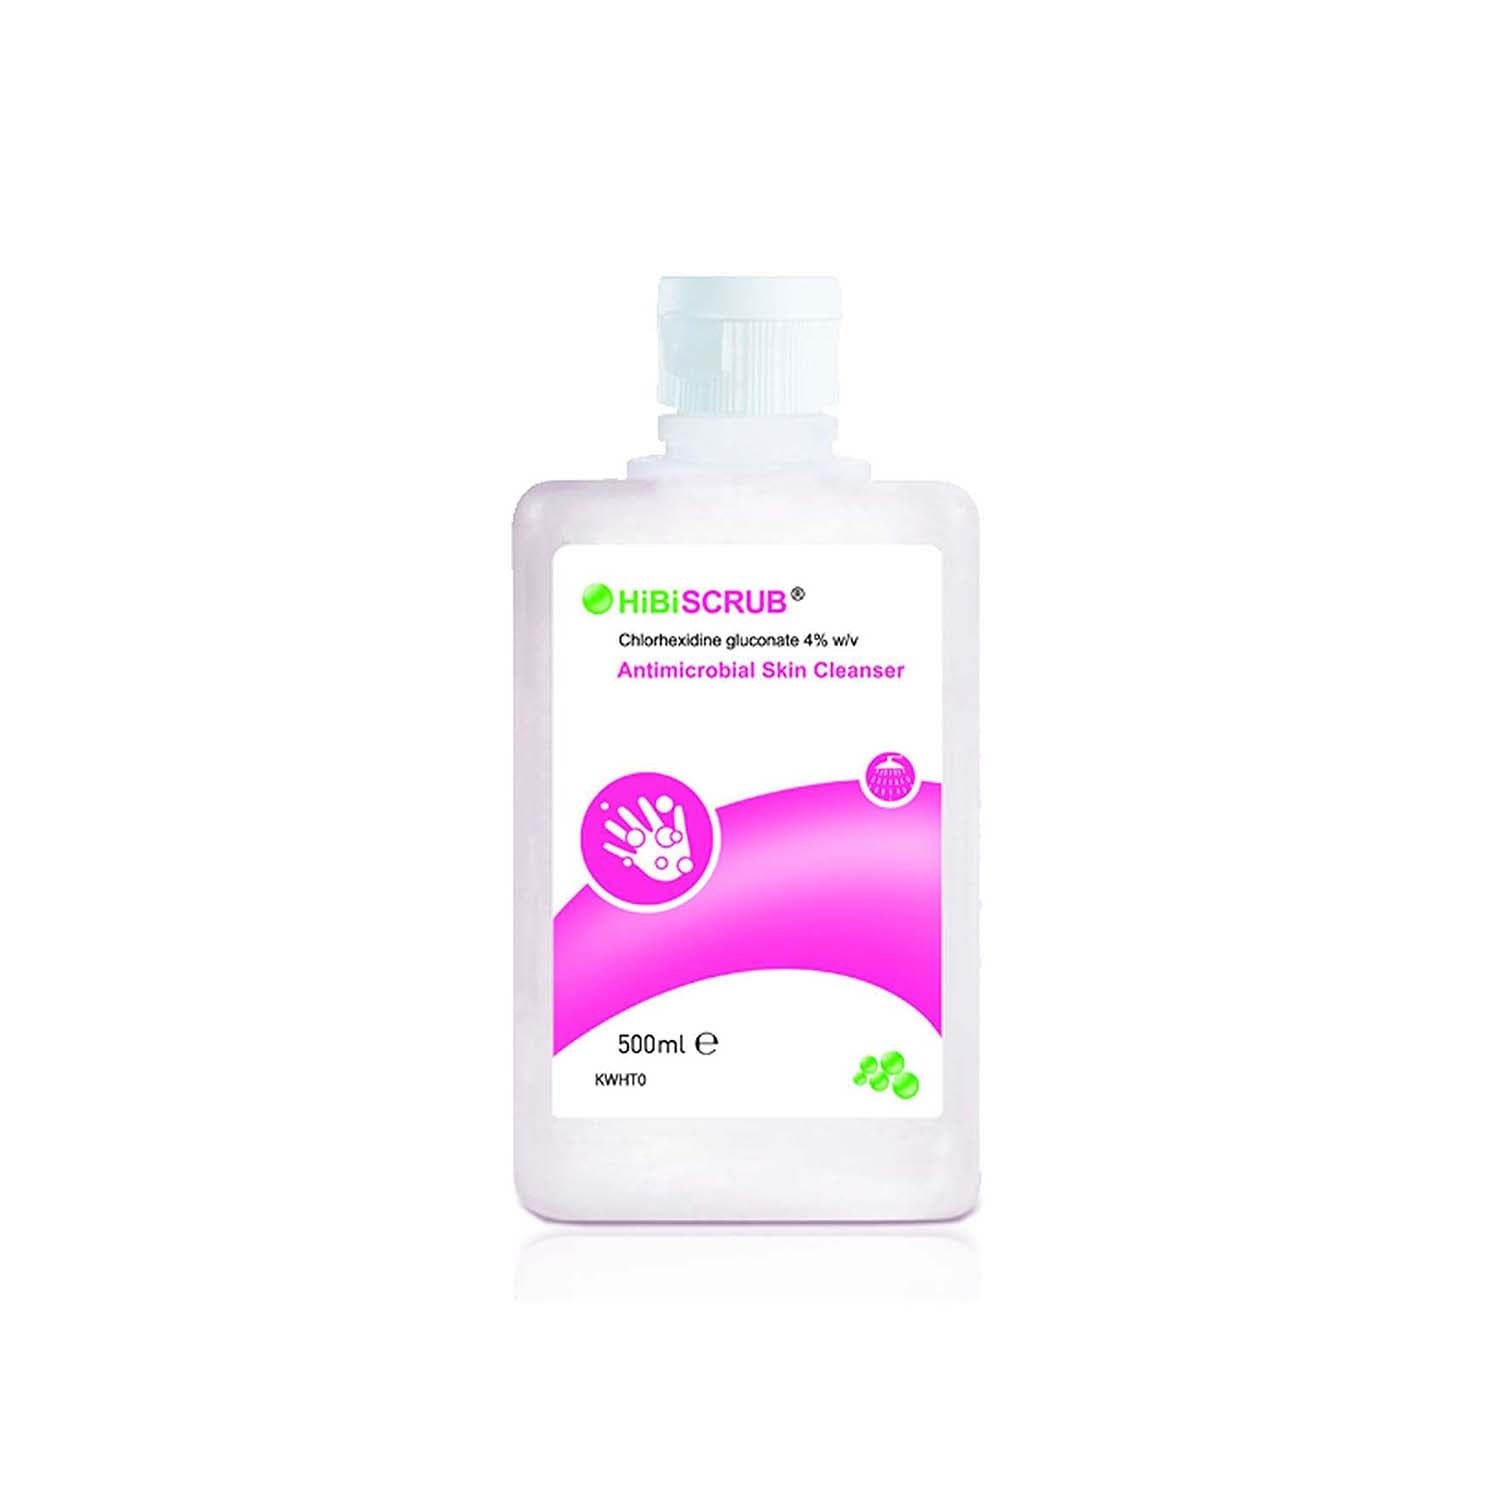 Hibiscrub Antimicrobial | GSL | 4% / 500ml | Liquid | Single